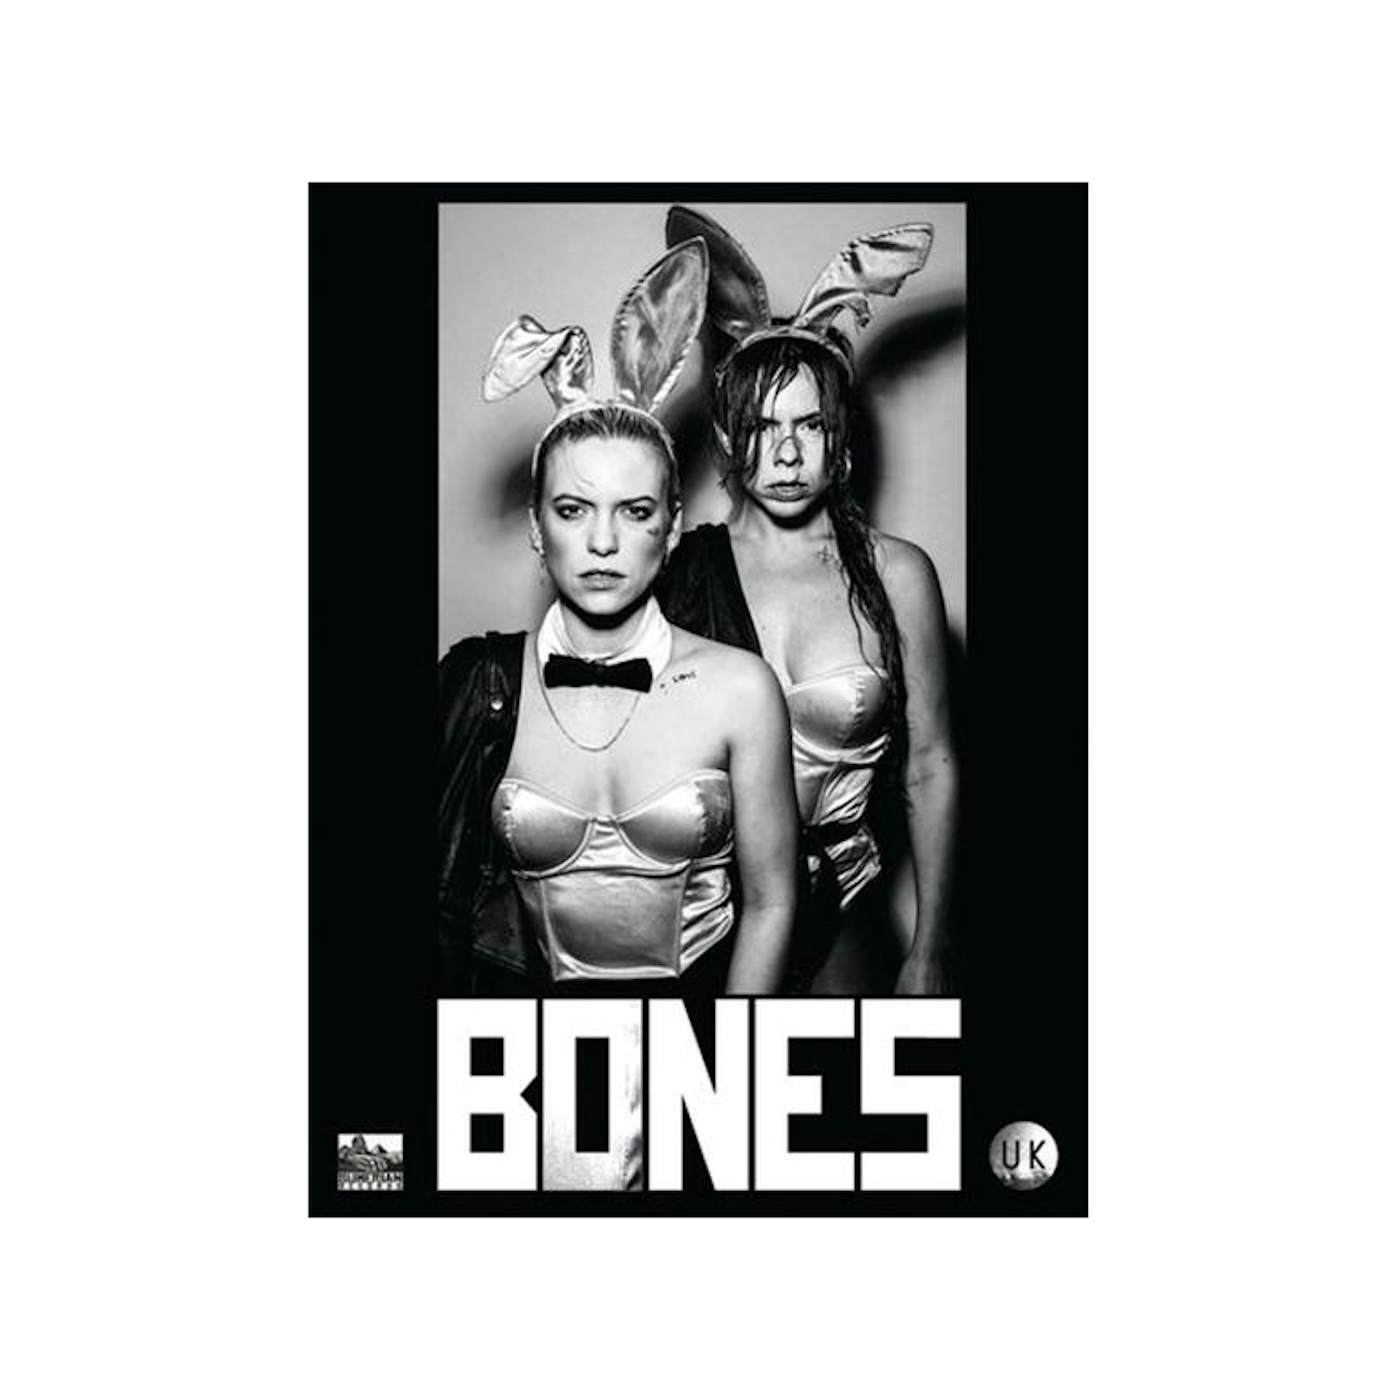 Bones UK "Self-Titled" 18x24" Poster